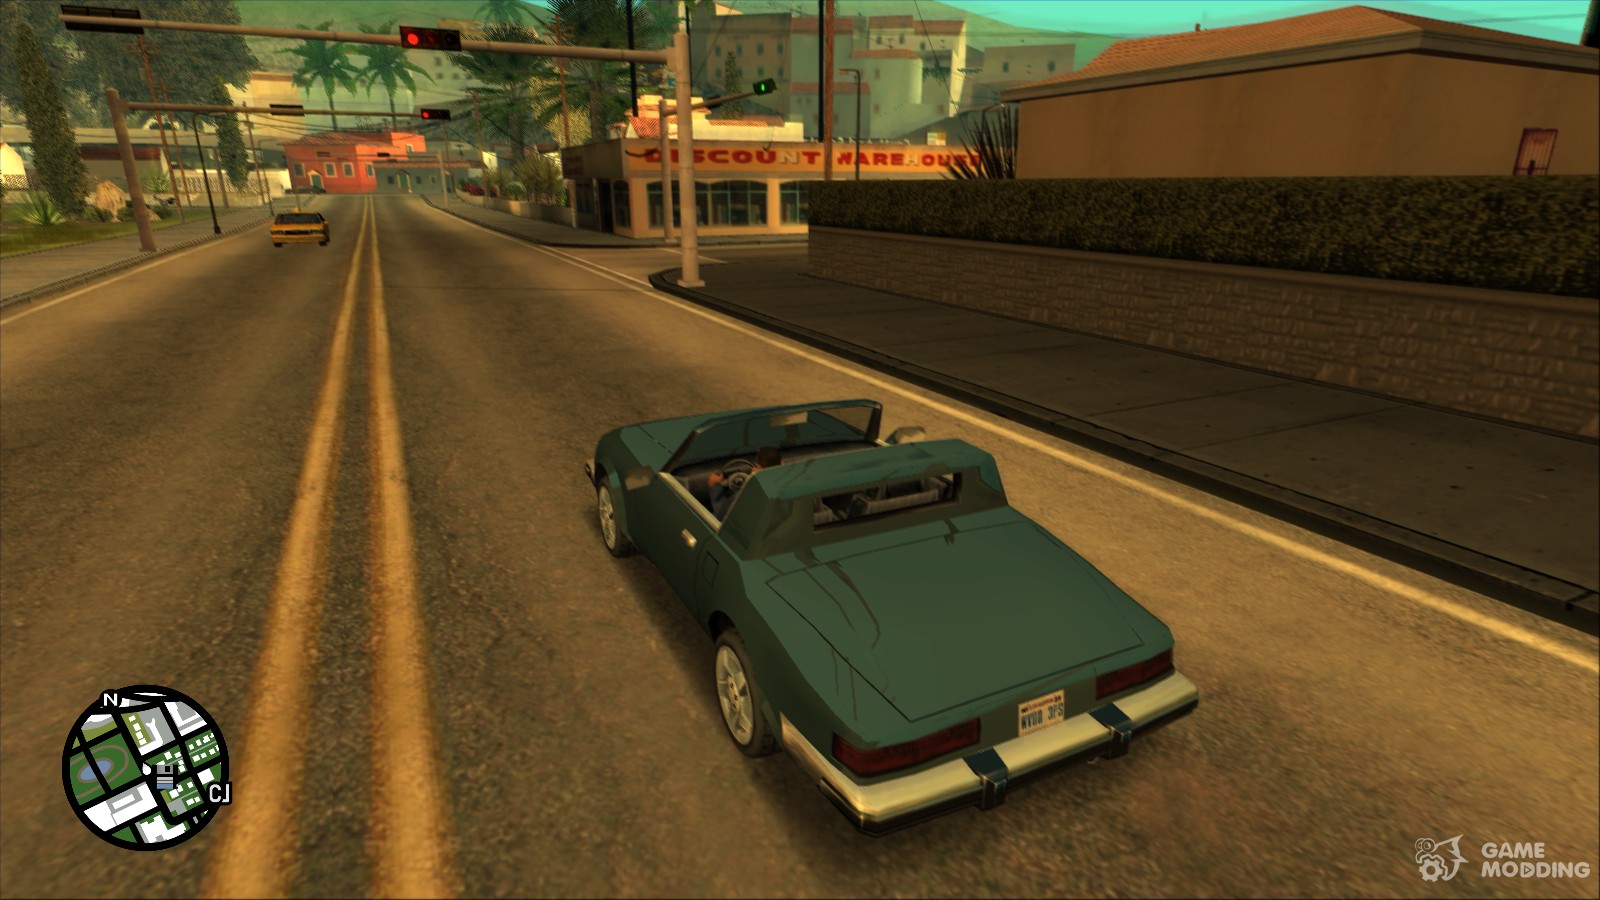 GTA San Andreas Remastered icon. GTA V Radar icons.